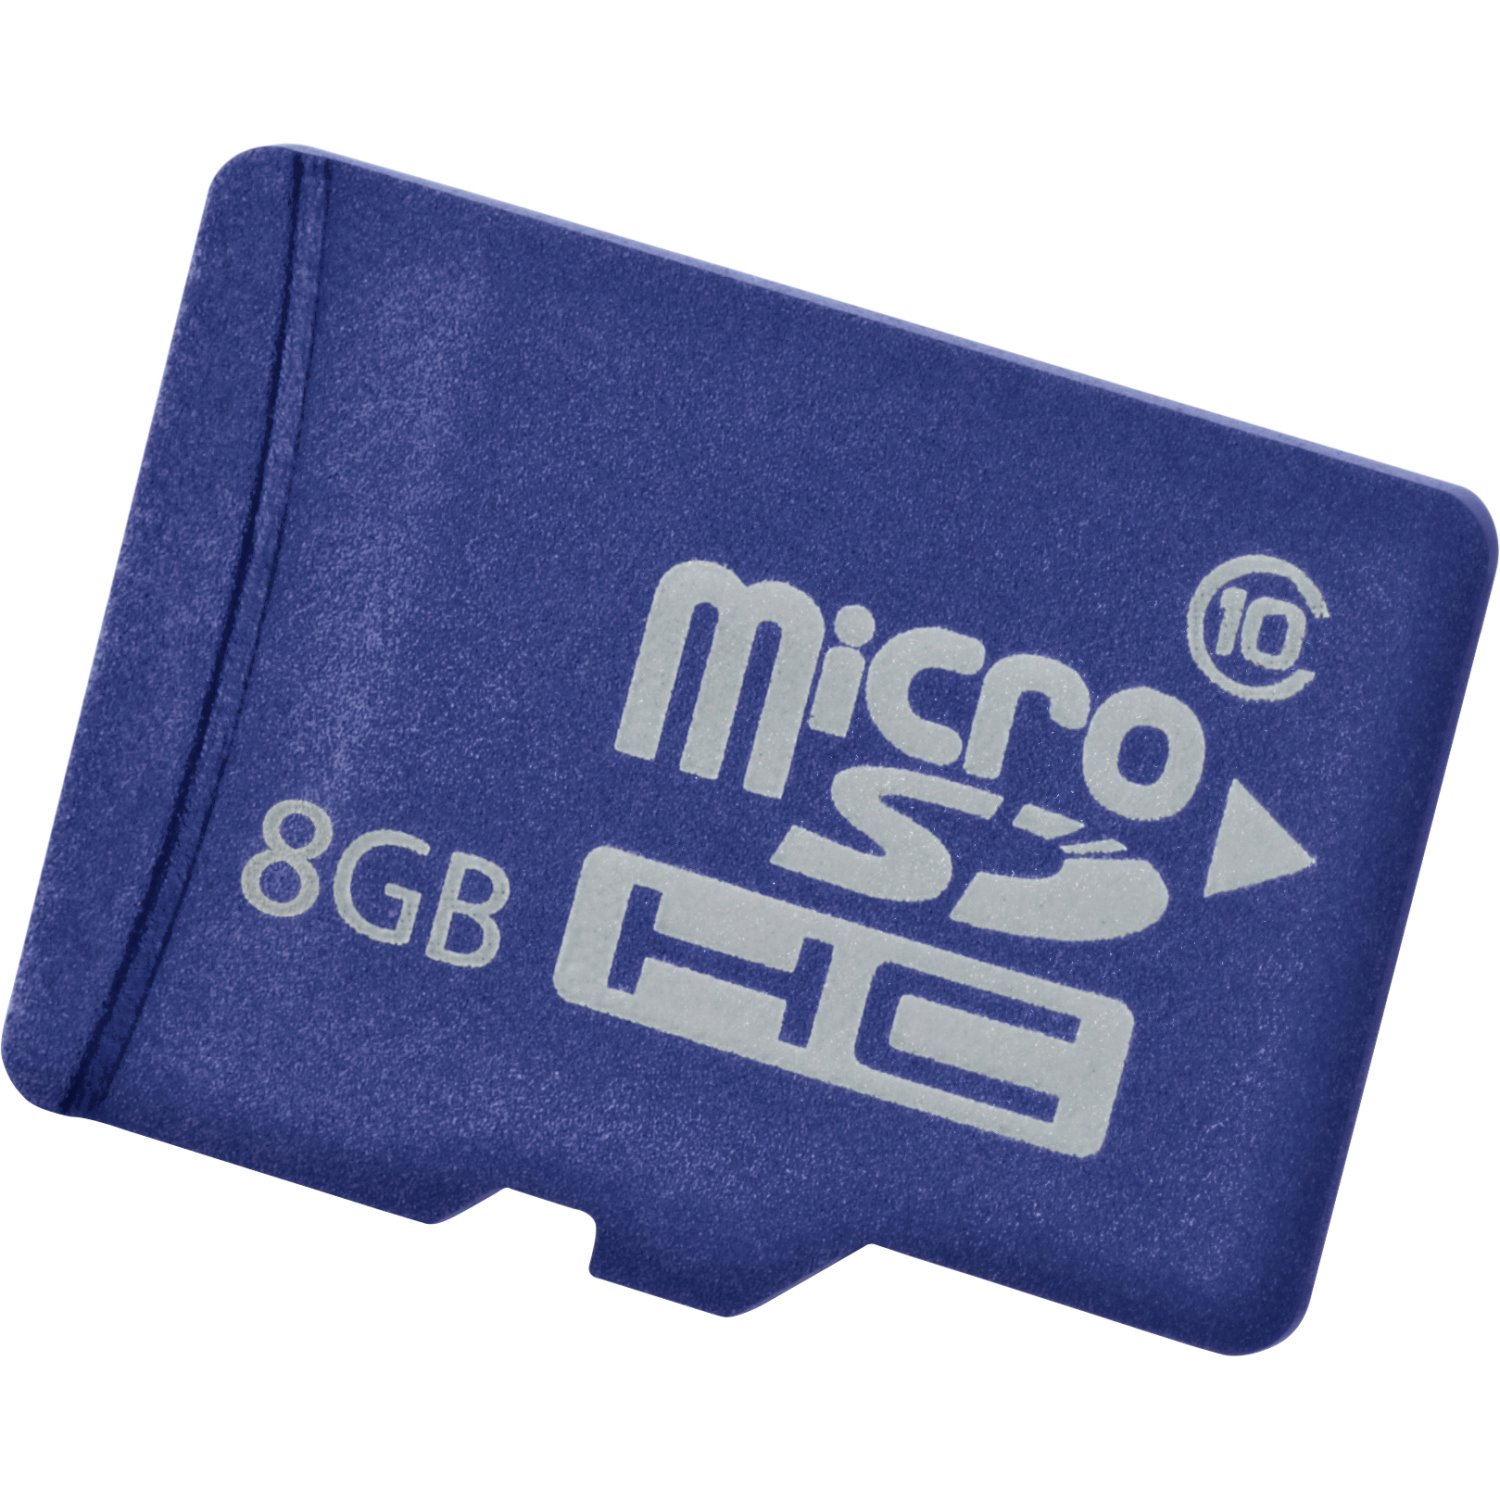 HPE 8GB microSD Flash Memory Card